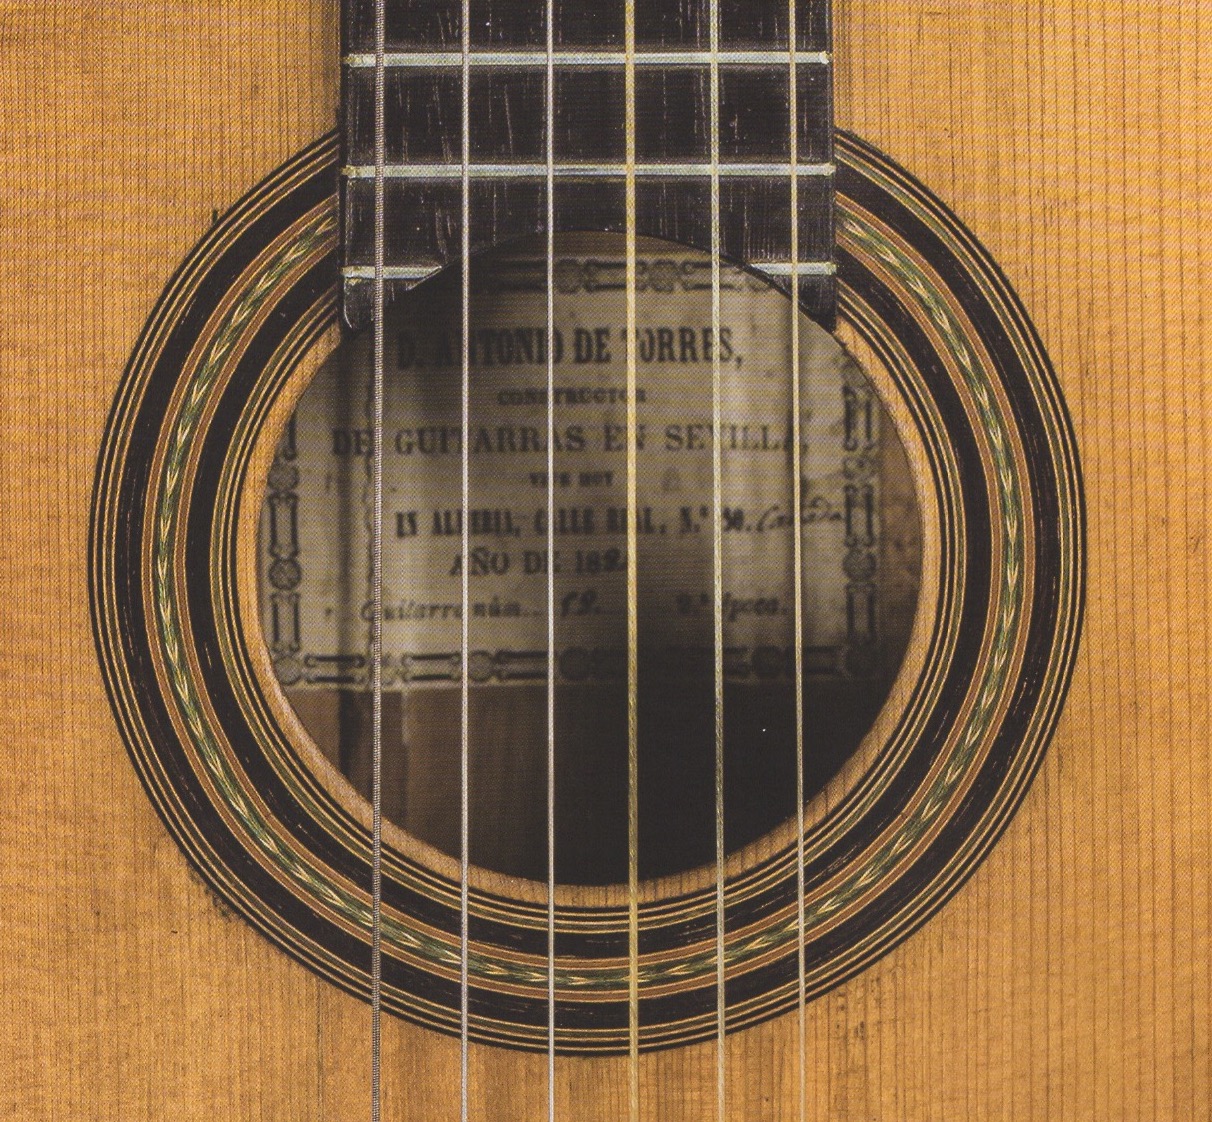 Guitare d'Antonio de Torres, SE58